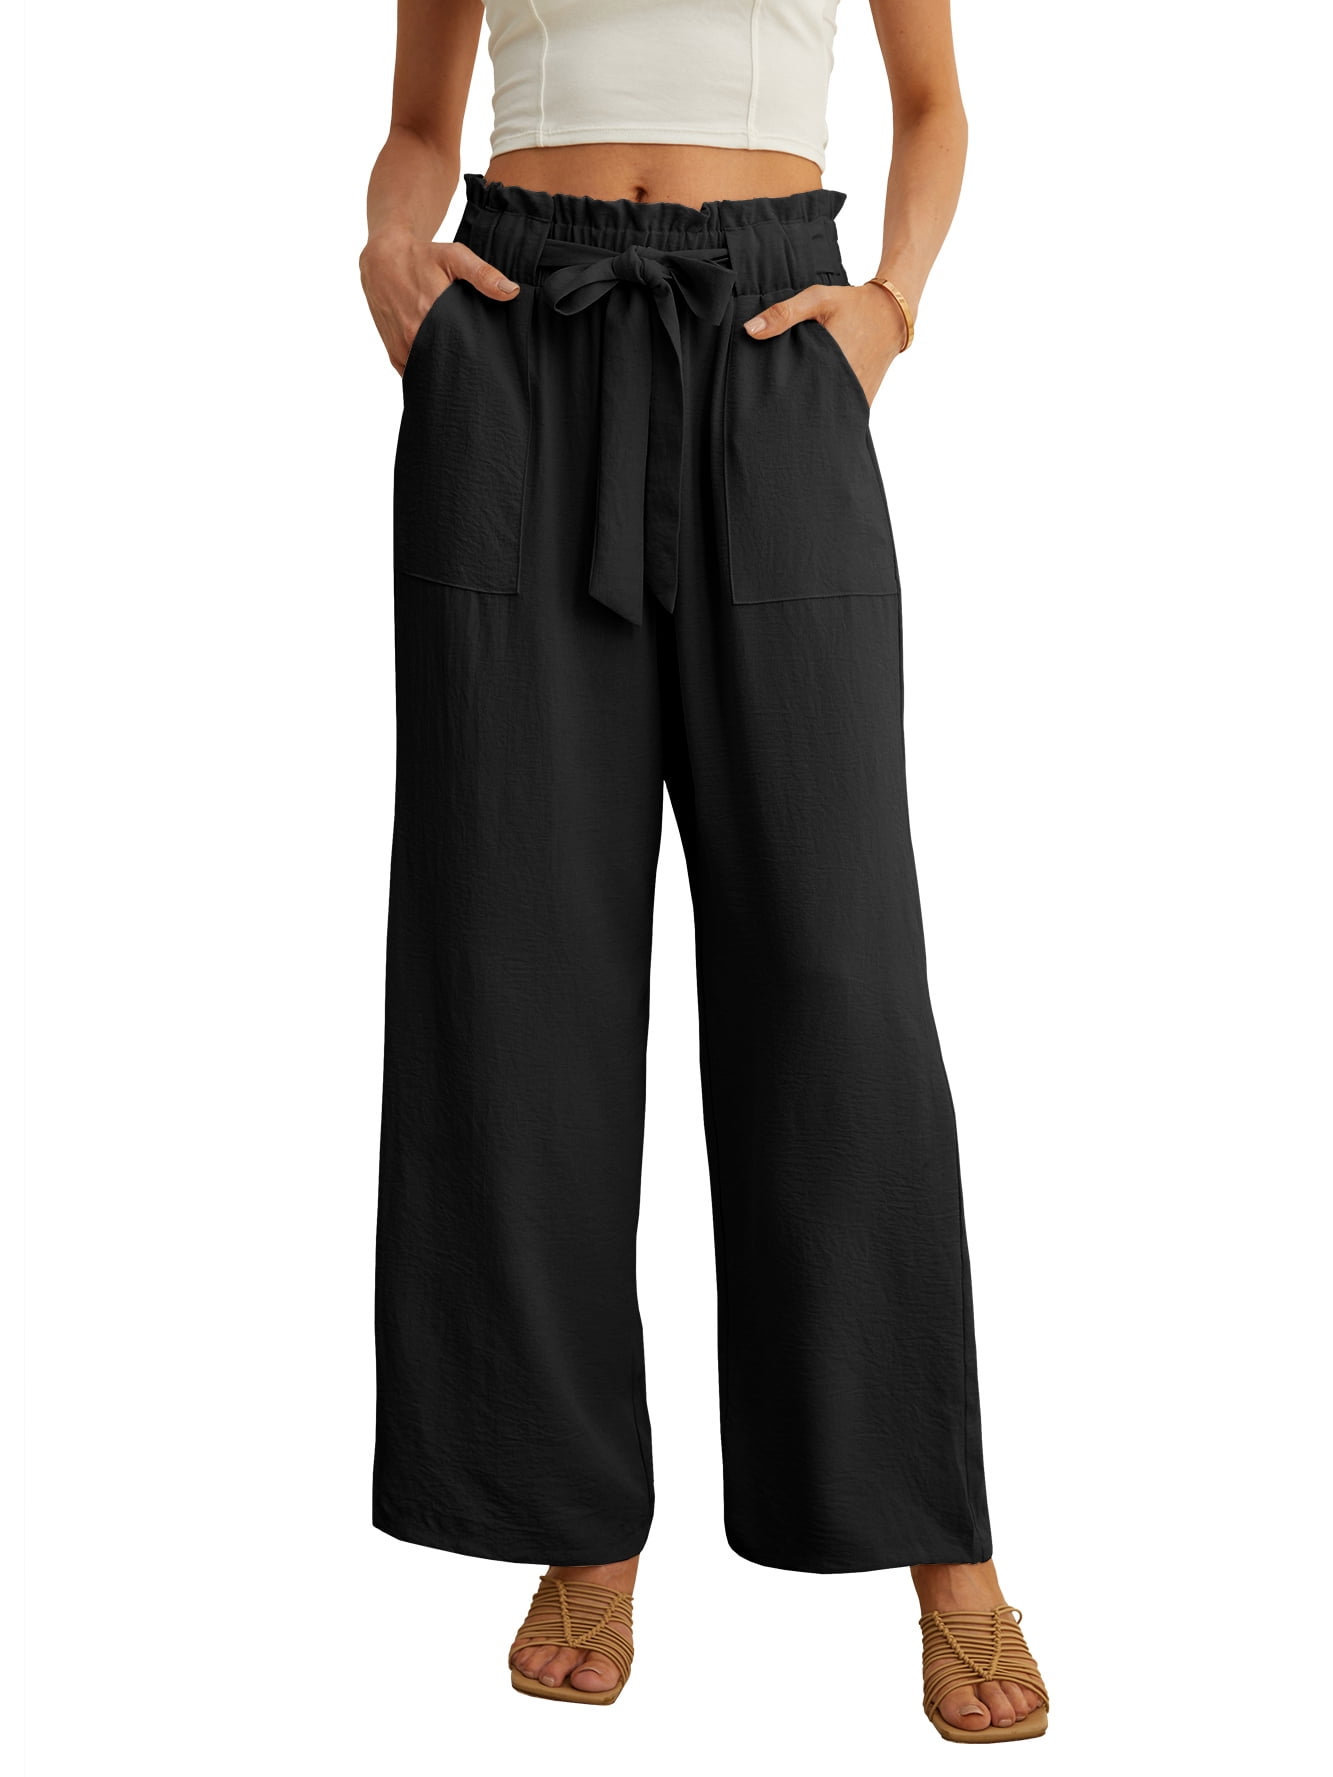 HDE Yoga Dress Pants for Women Straight Leg Pull On Pants with 8 Pockets  Khaki - L Regular